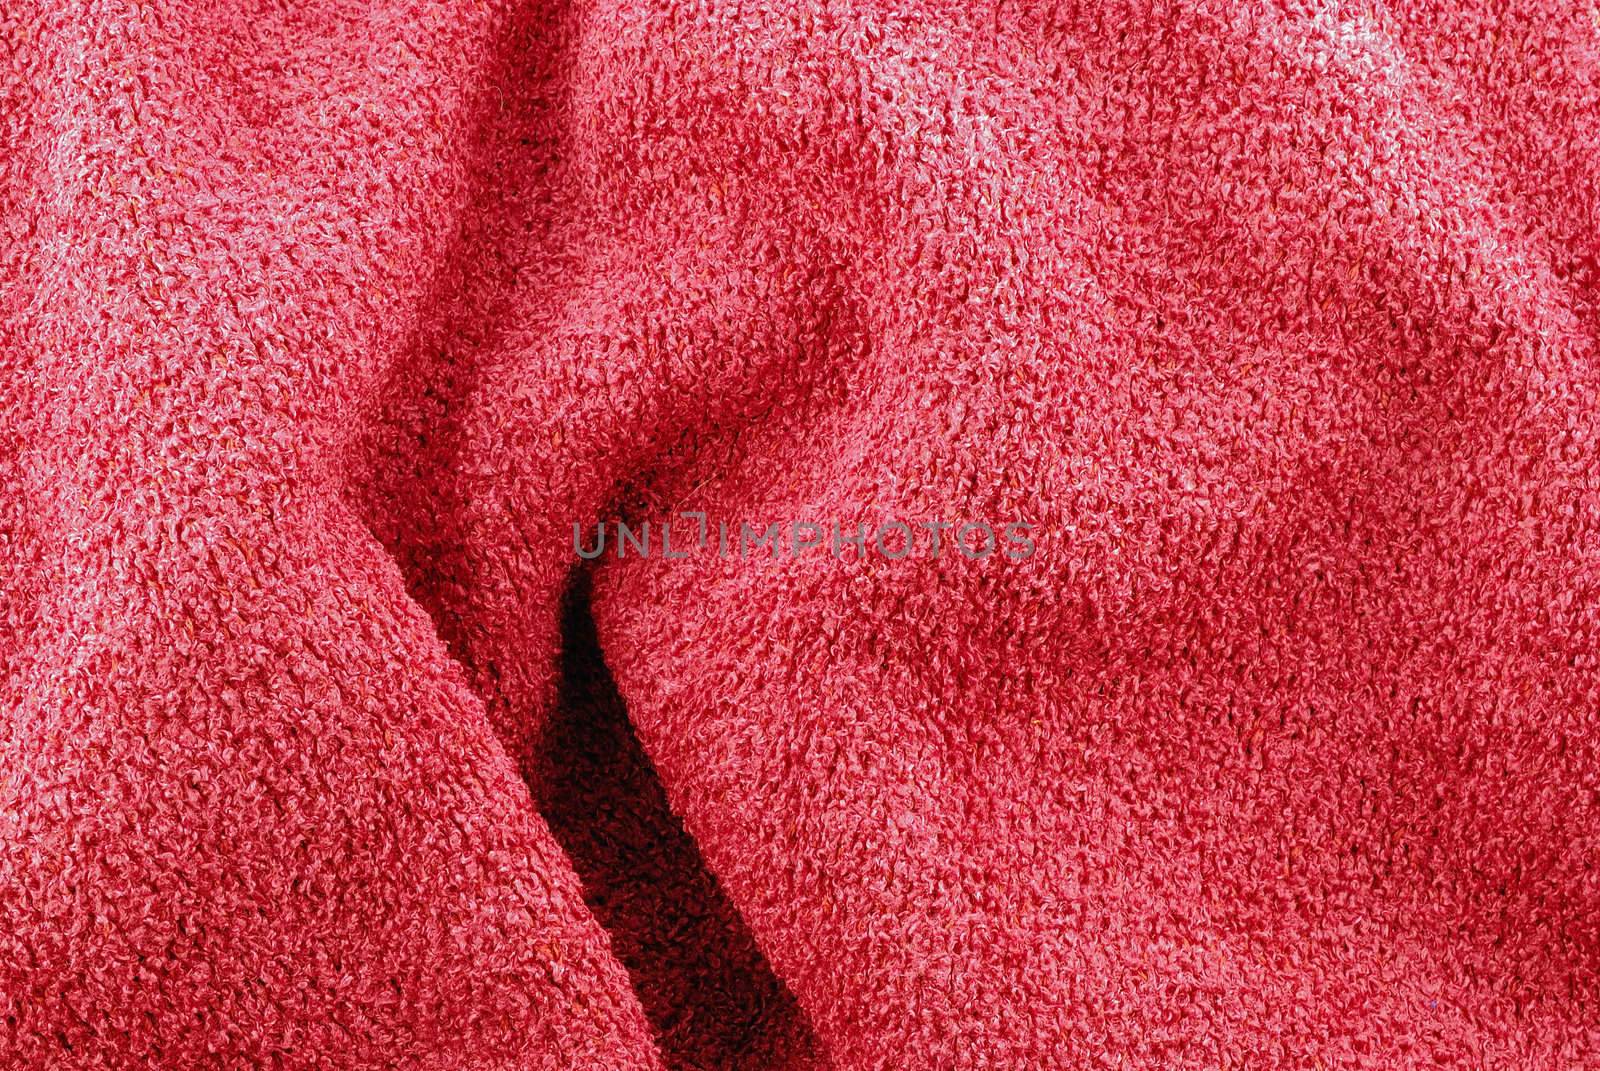 orange texture and details, terry cloth bath towel textile background